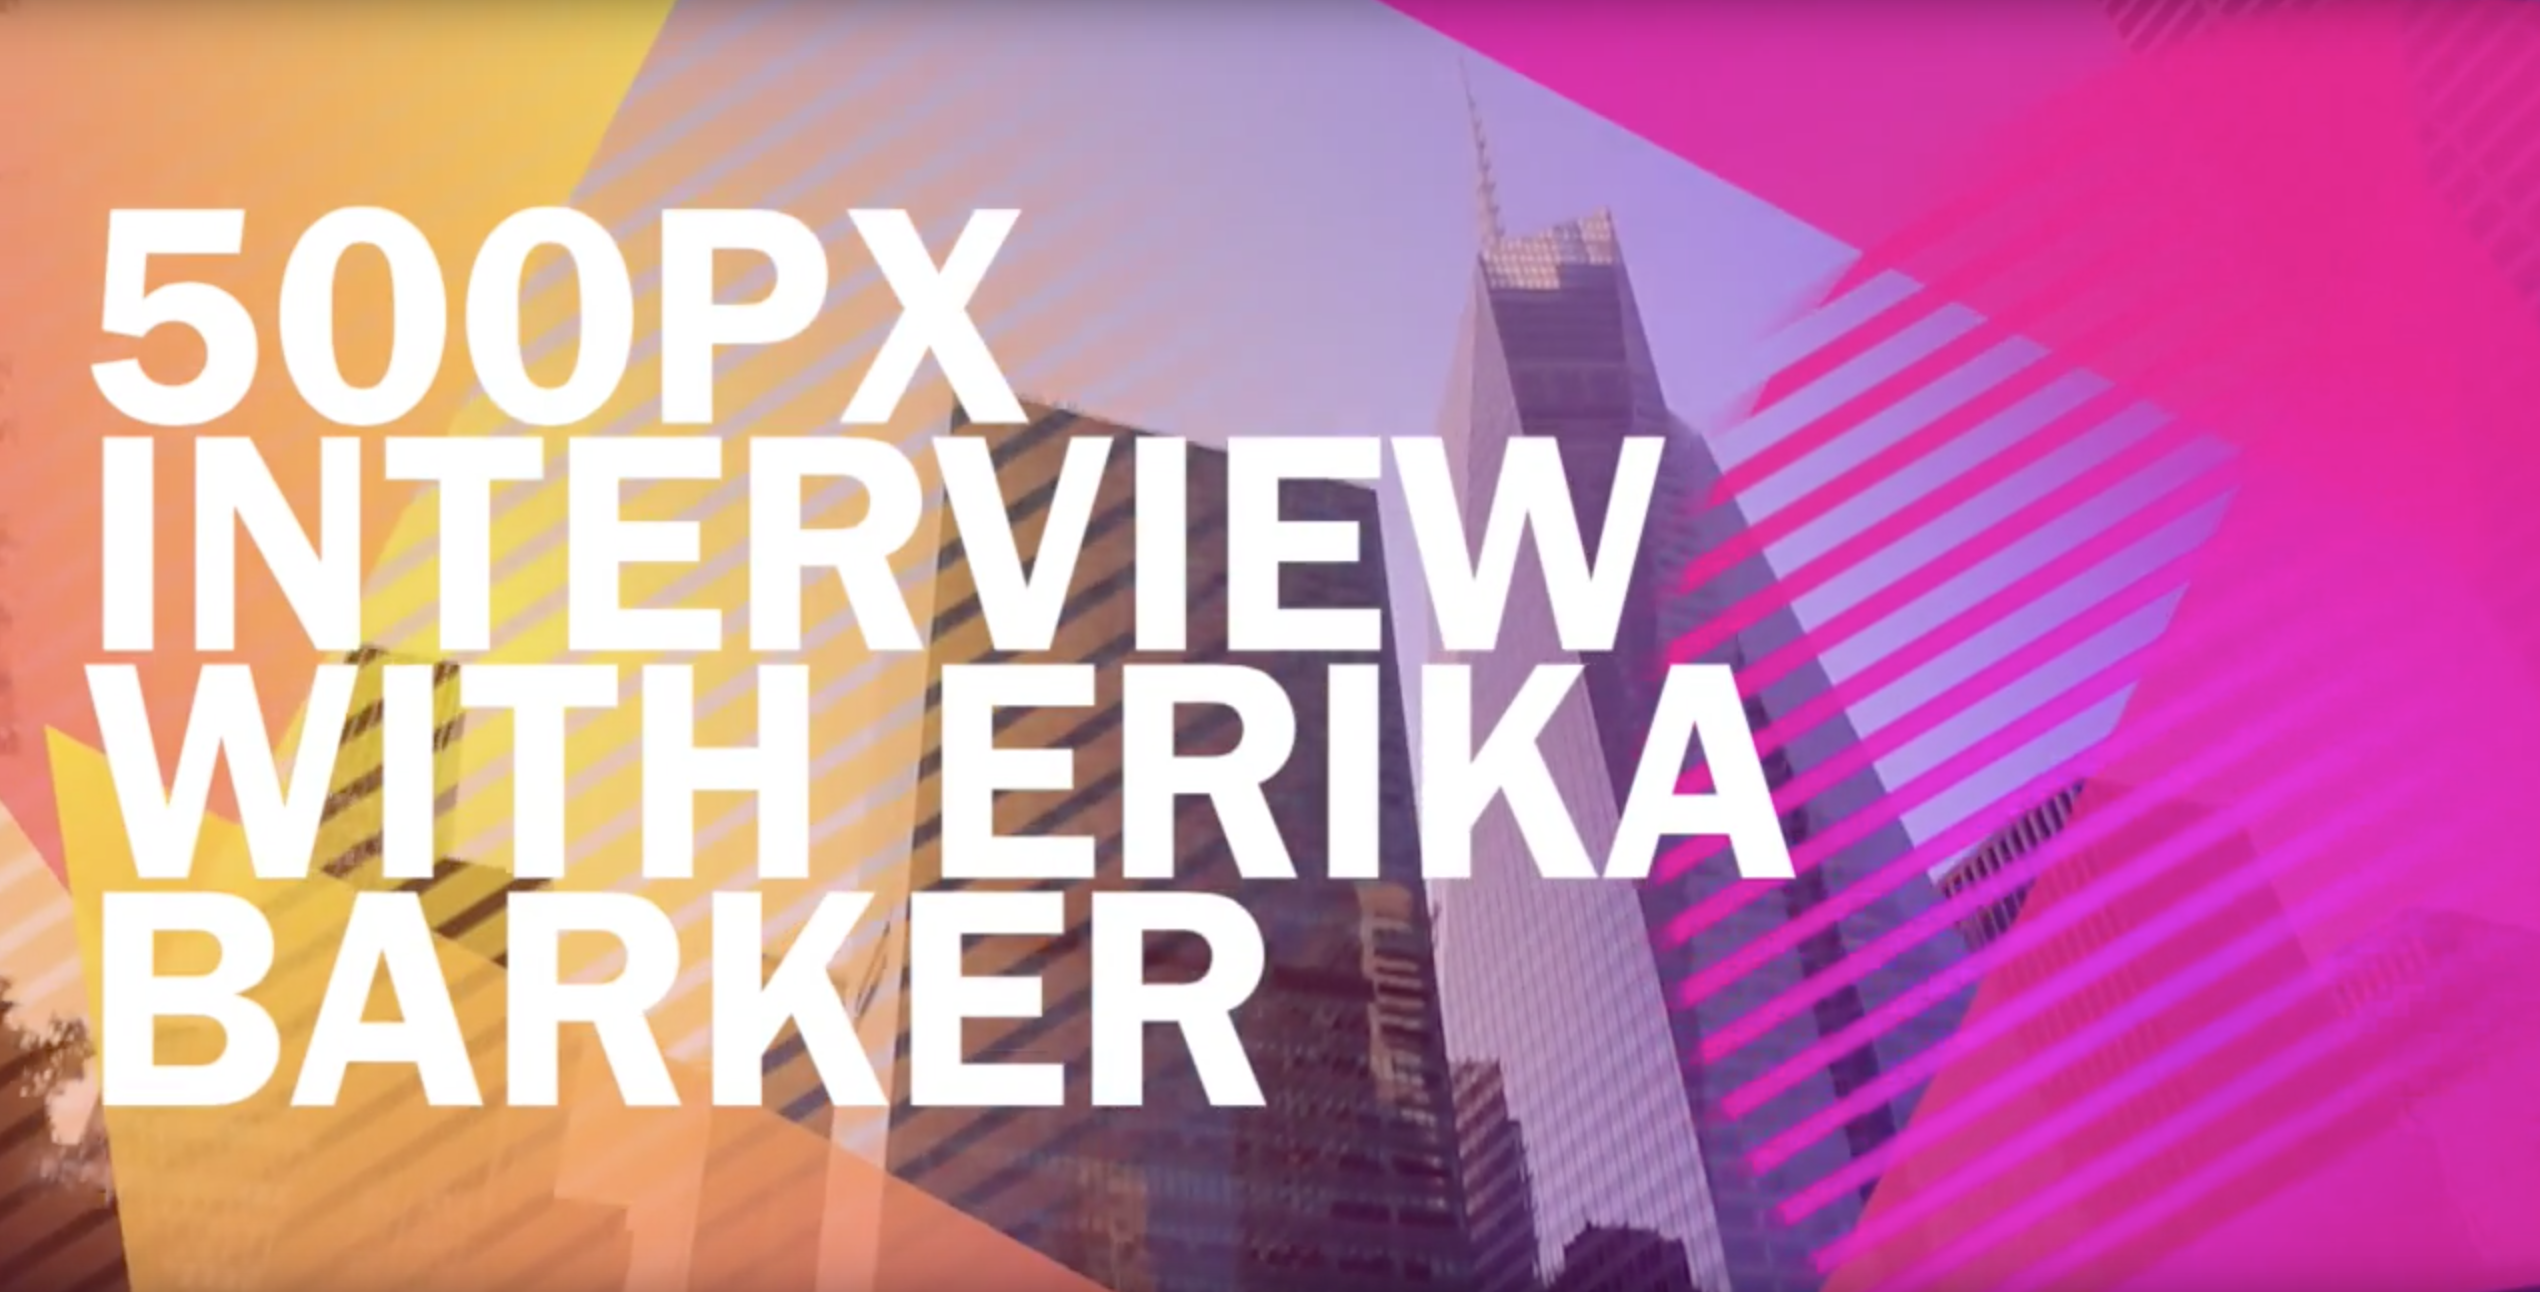 500px Interviews Erika Barker